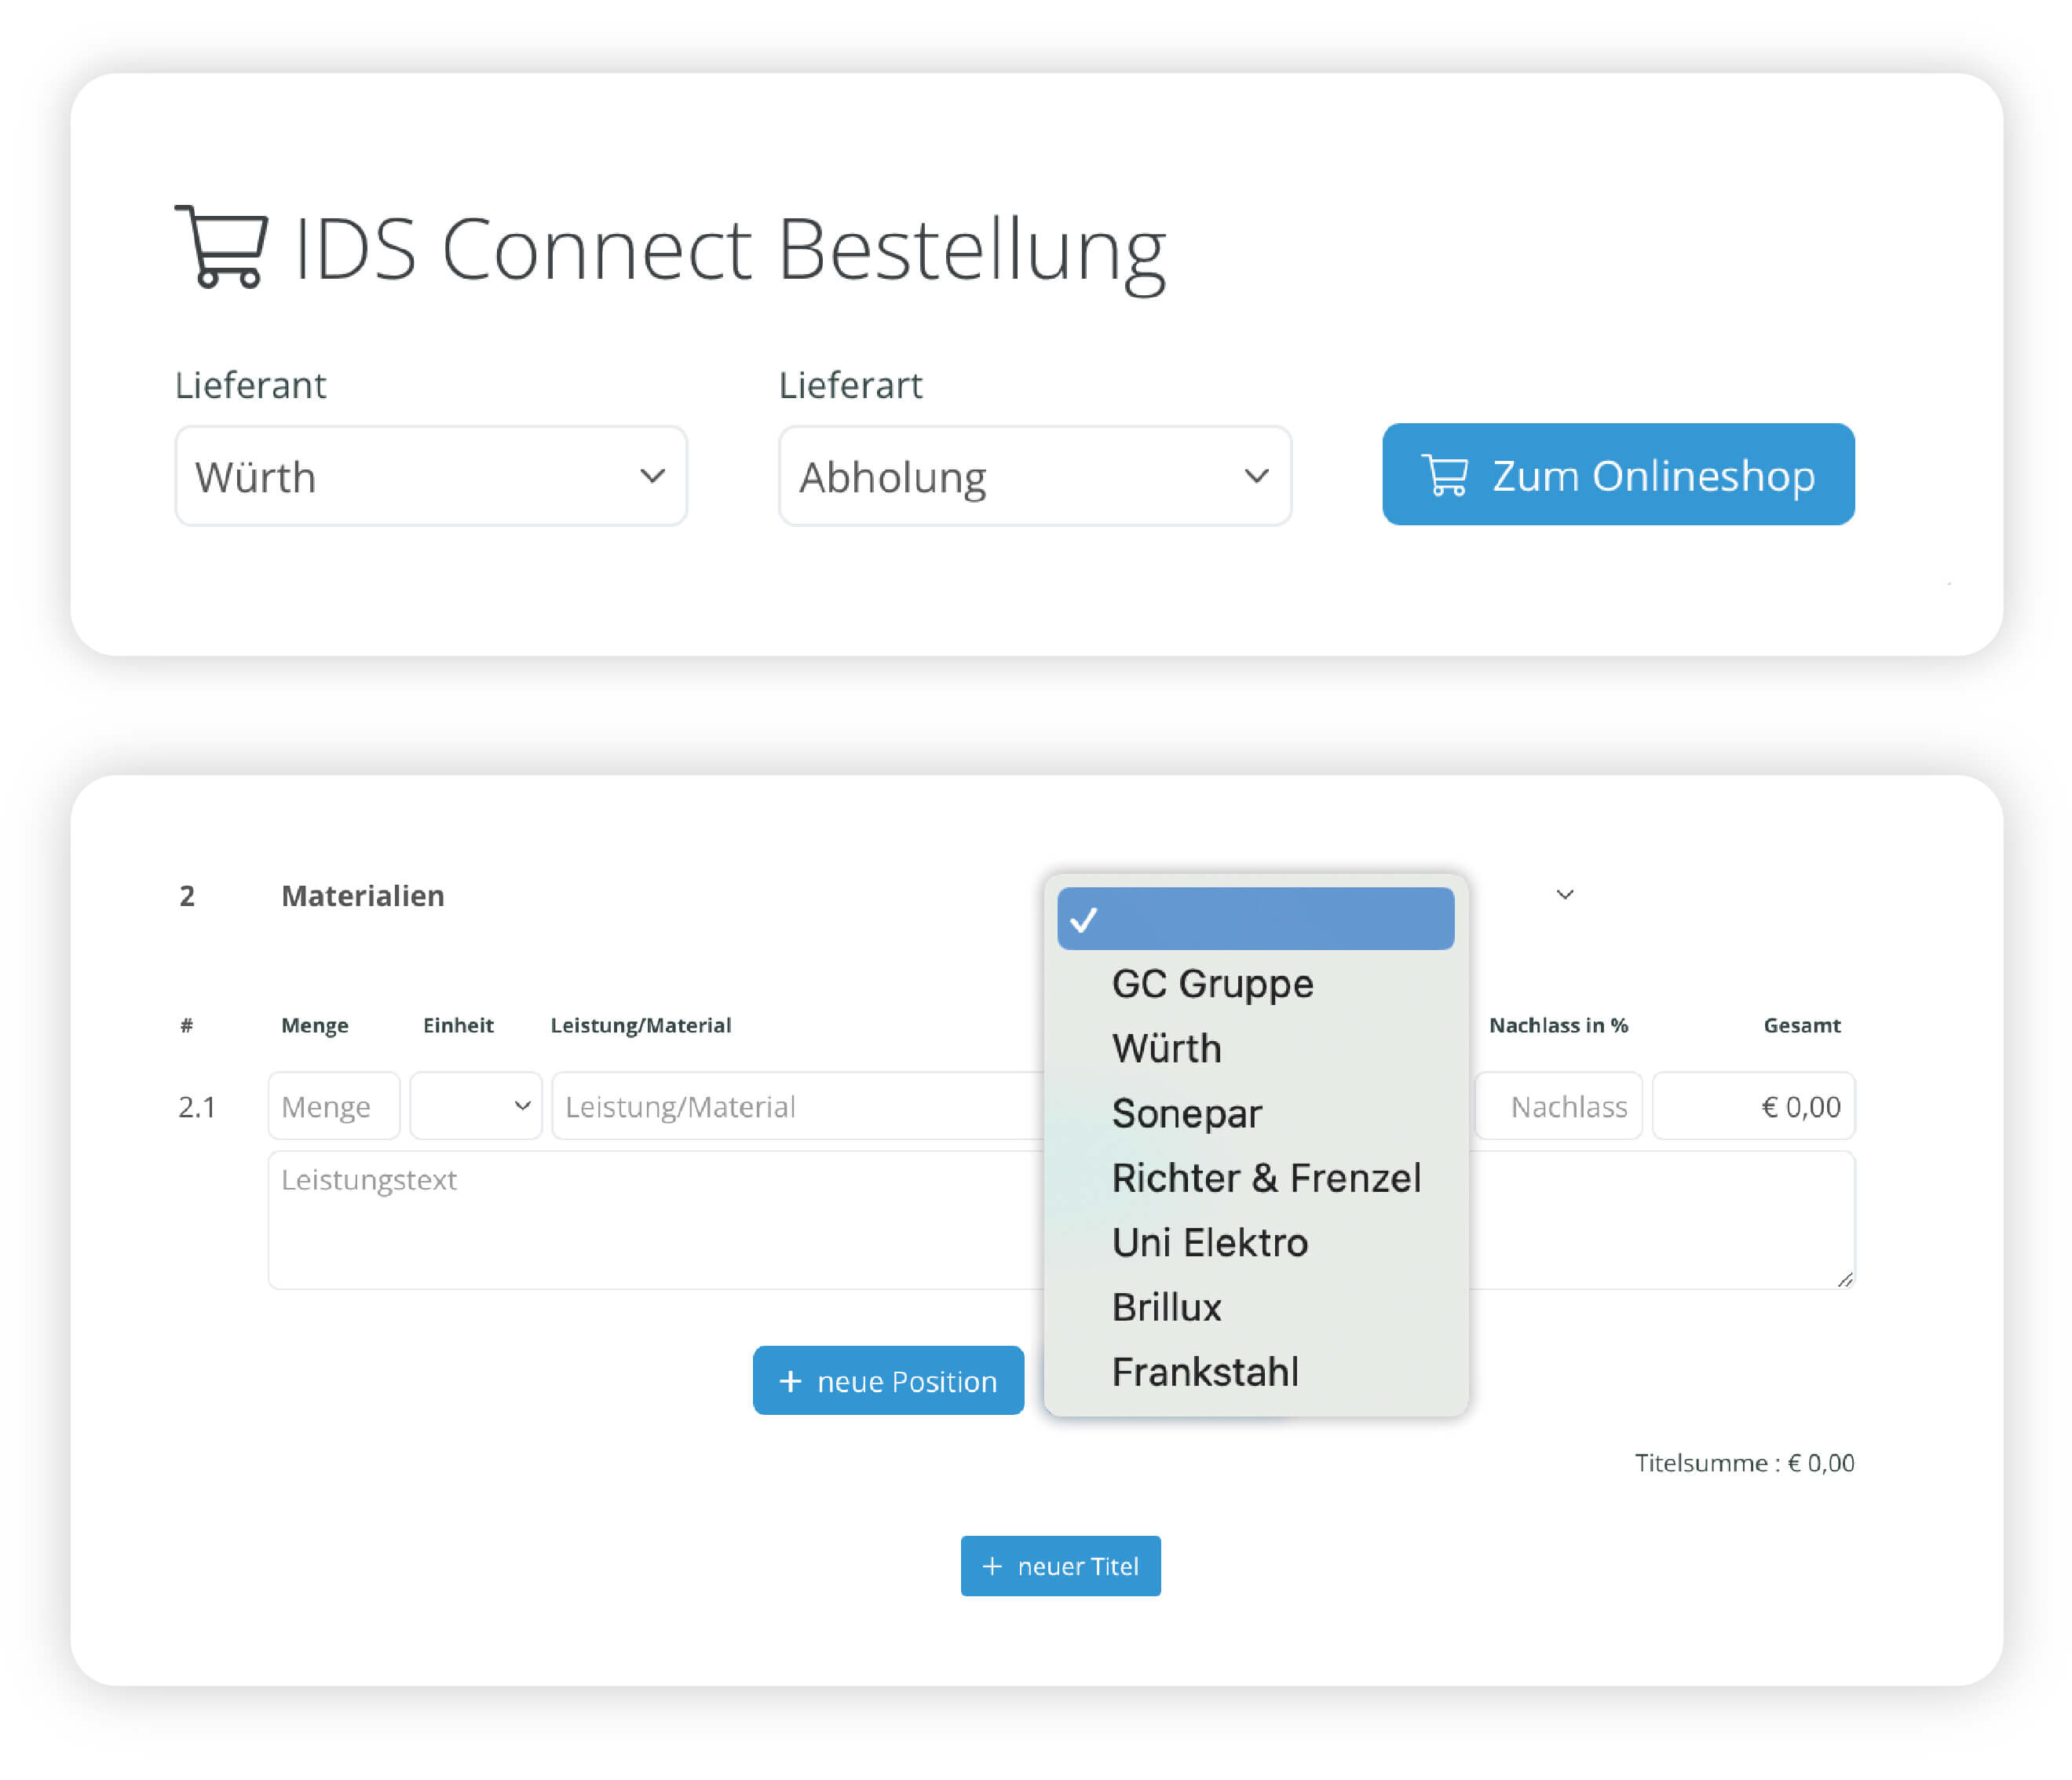 ids-connect Bestellung